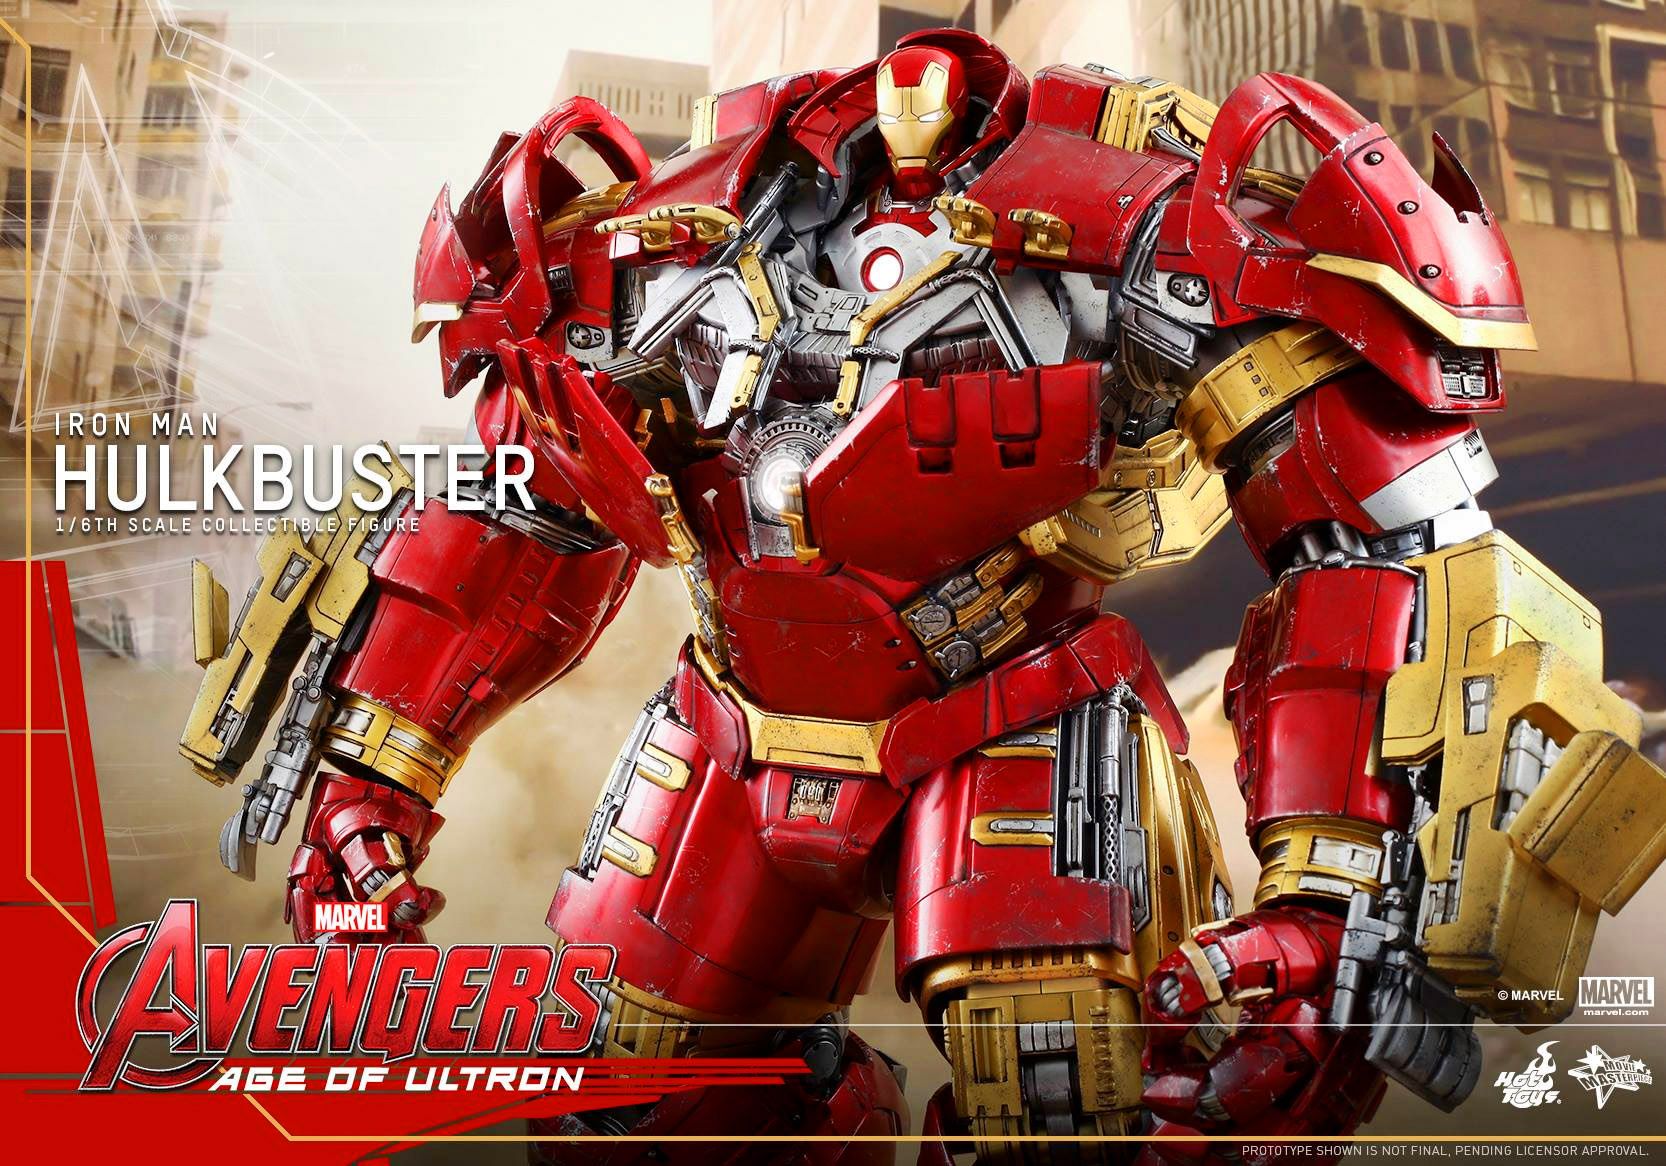 Take An Up Close Look At Iron Man's Hulkbuster Armor